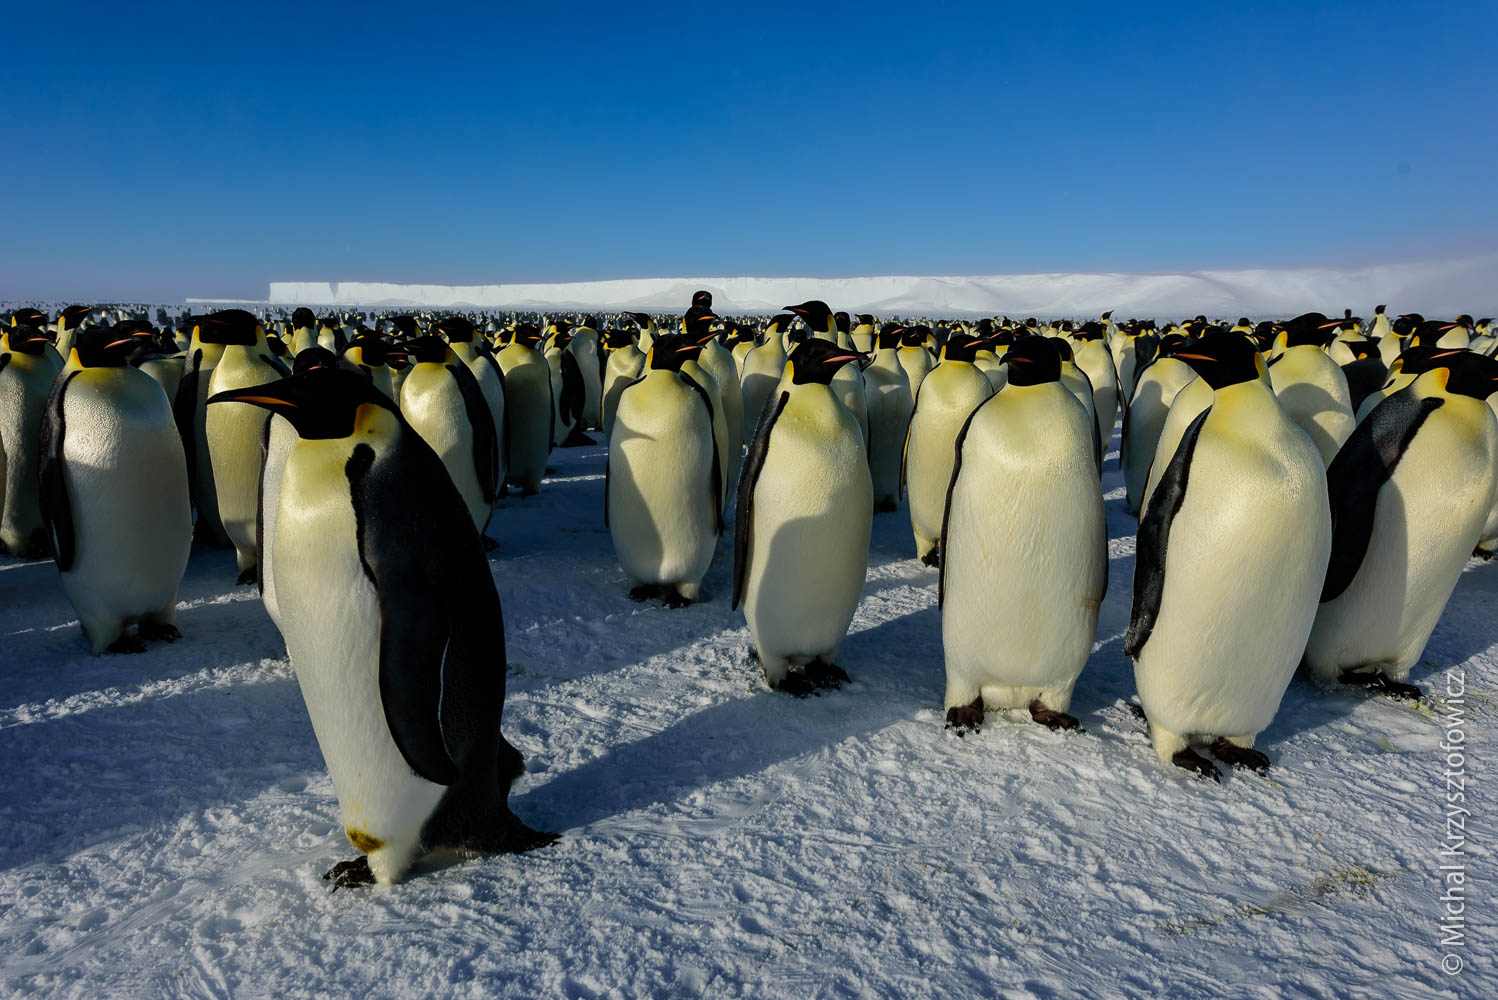 More Emperor Penguins